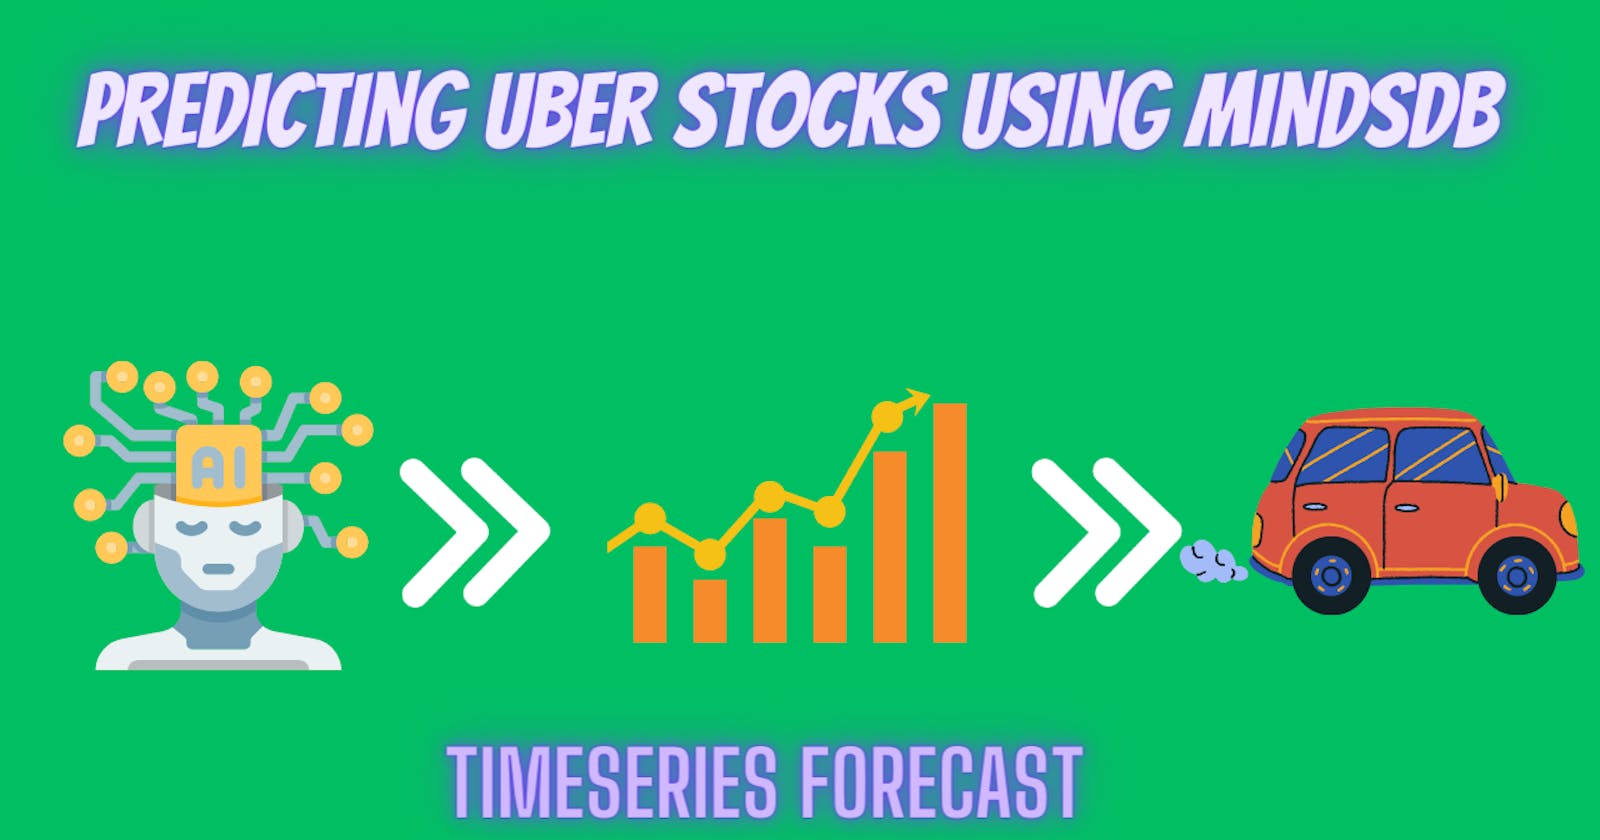 Forecast Uber Stock Prices using MindsDB